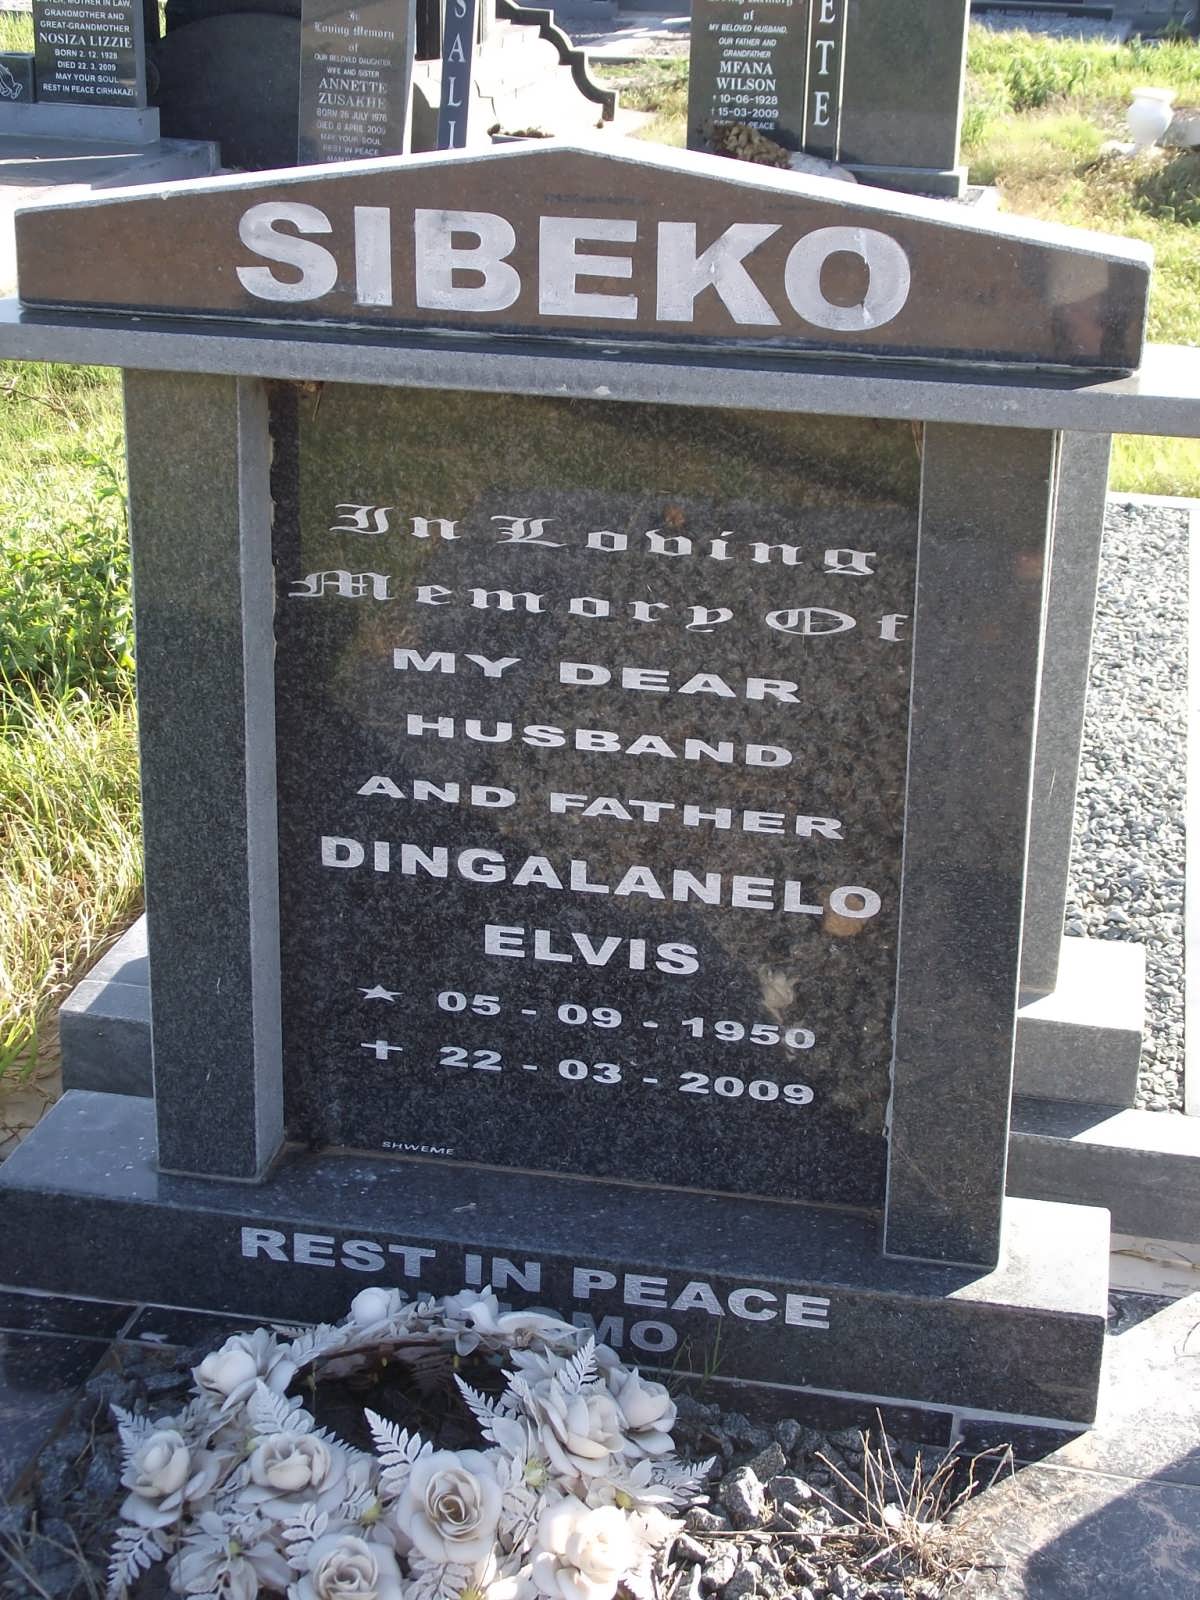 SIBEKO Dingalanelo Elvis 1950-2009